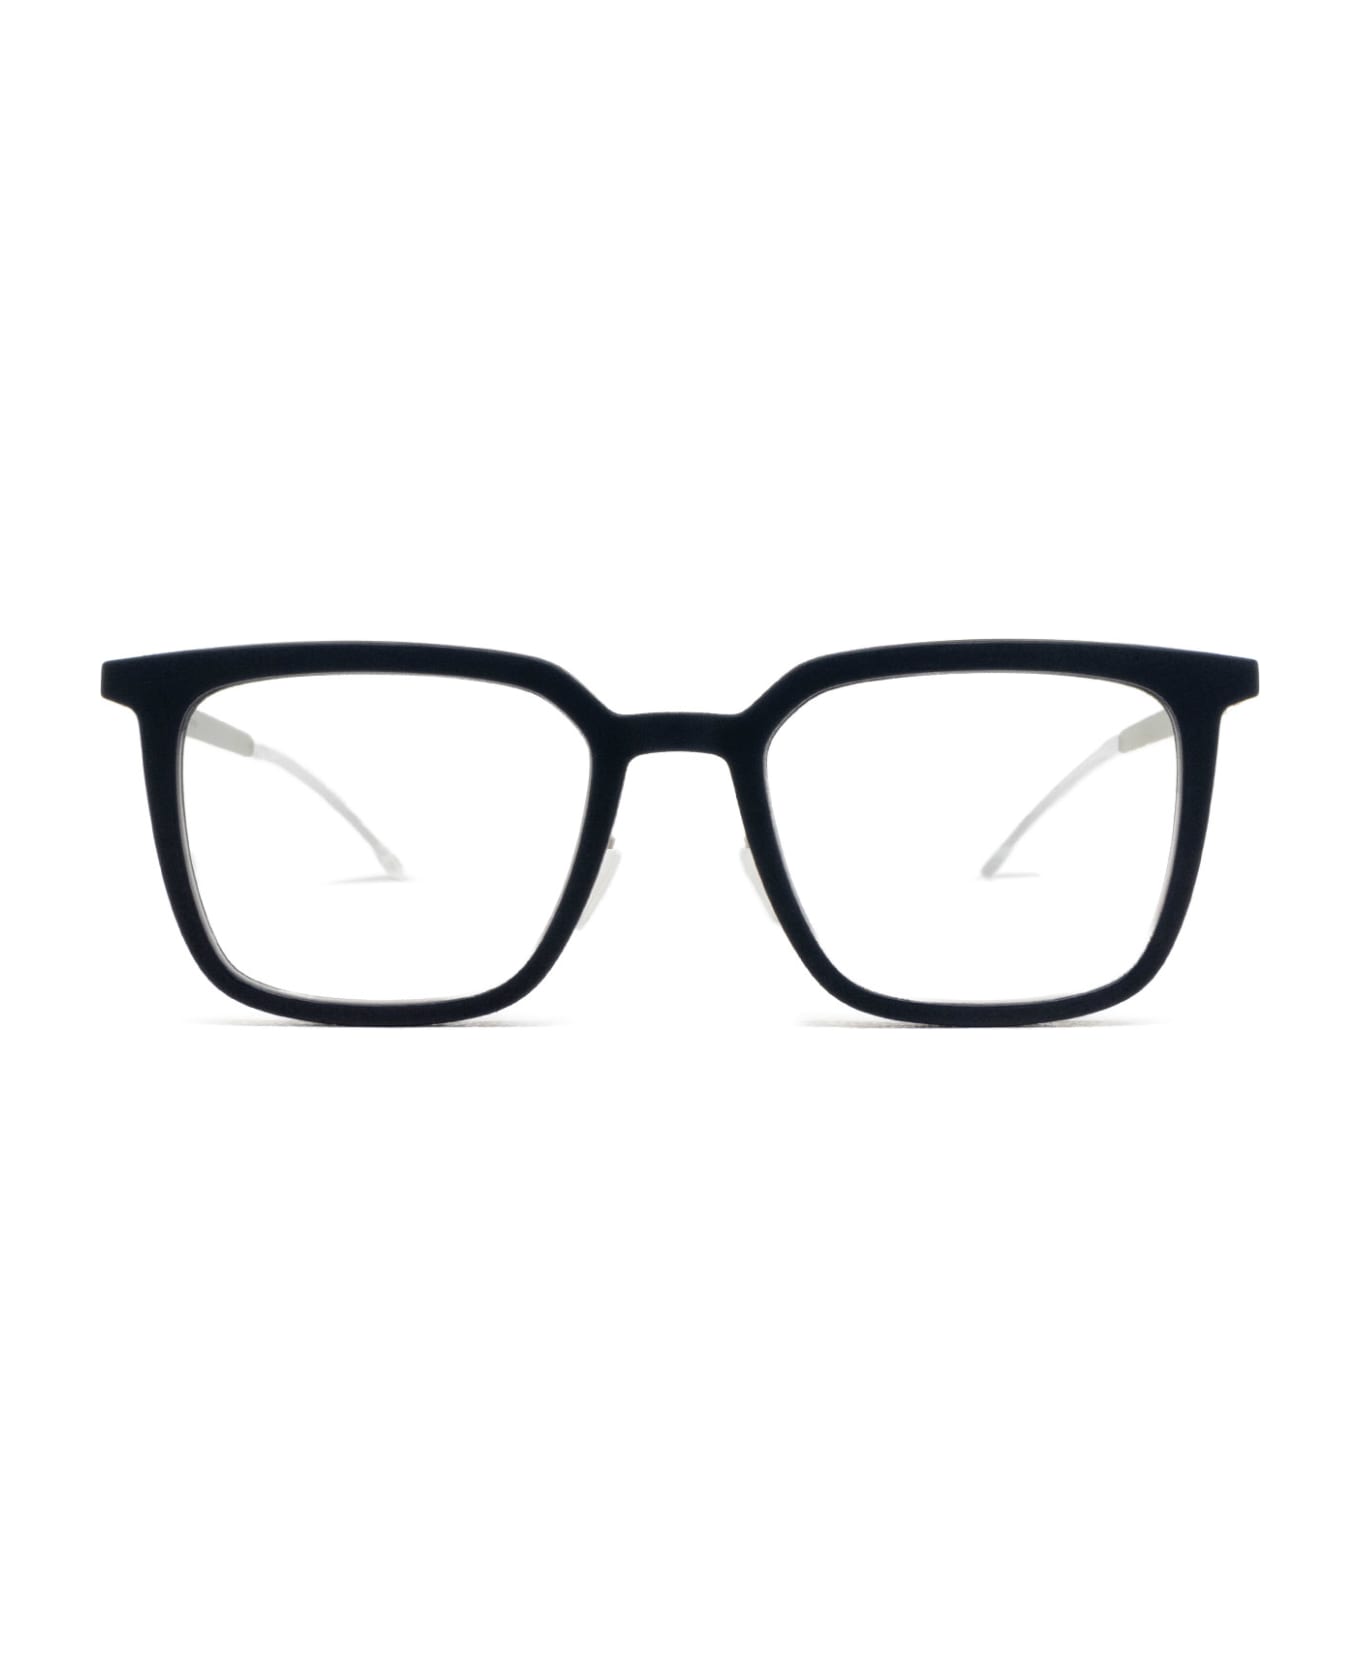 Mykita Kolding Mh69-indigo/matte Silver Glasses - MH69-Indigo/Matte Silver アイウェア